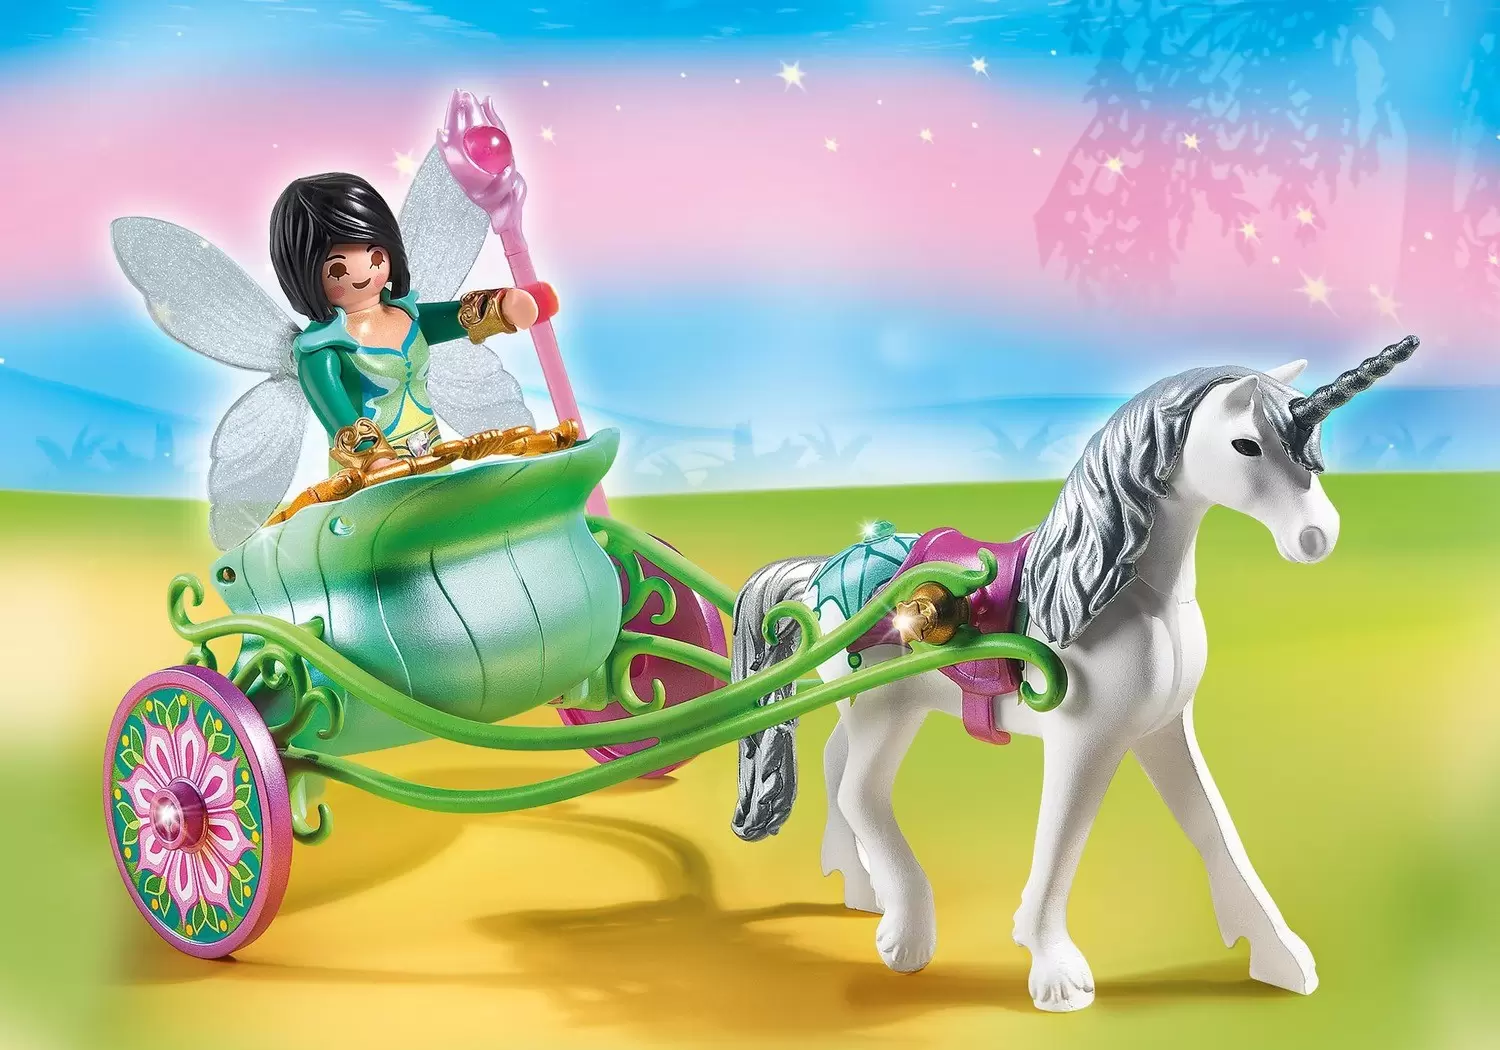 Playmobil Fairies - Fairy Carriage with Unicorn